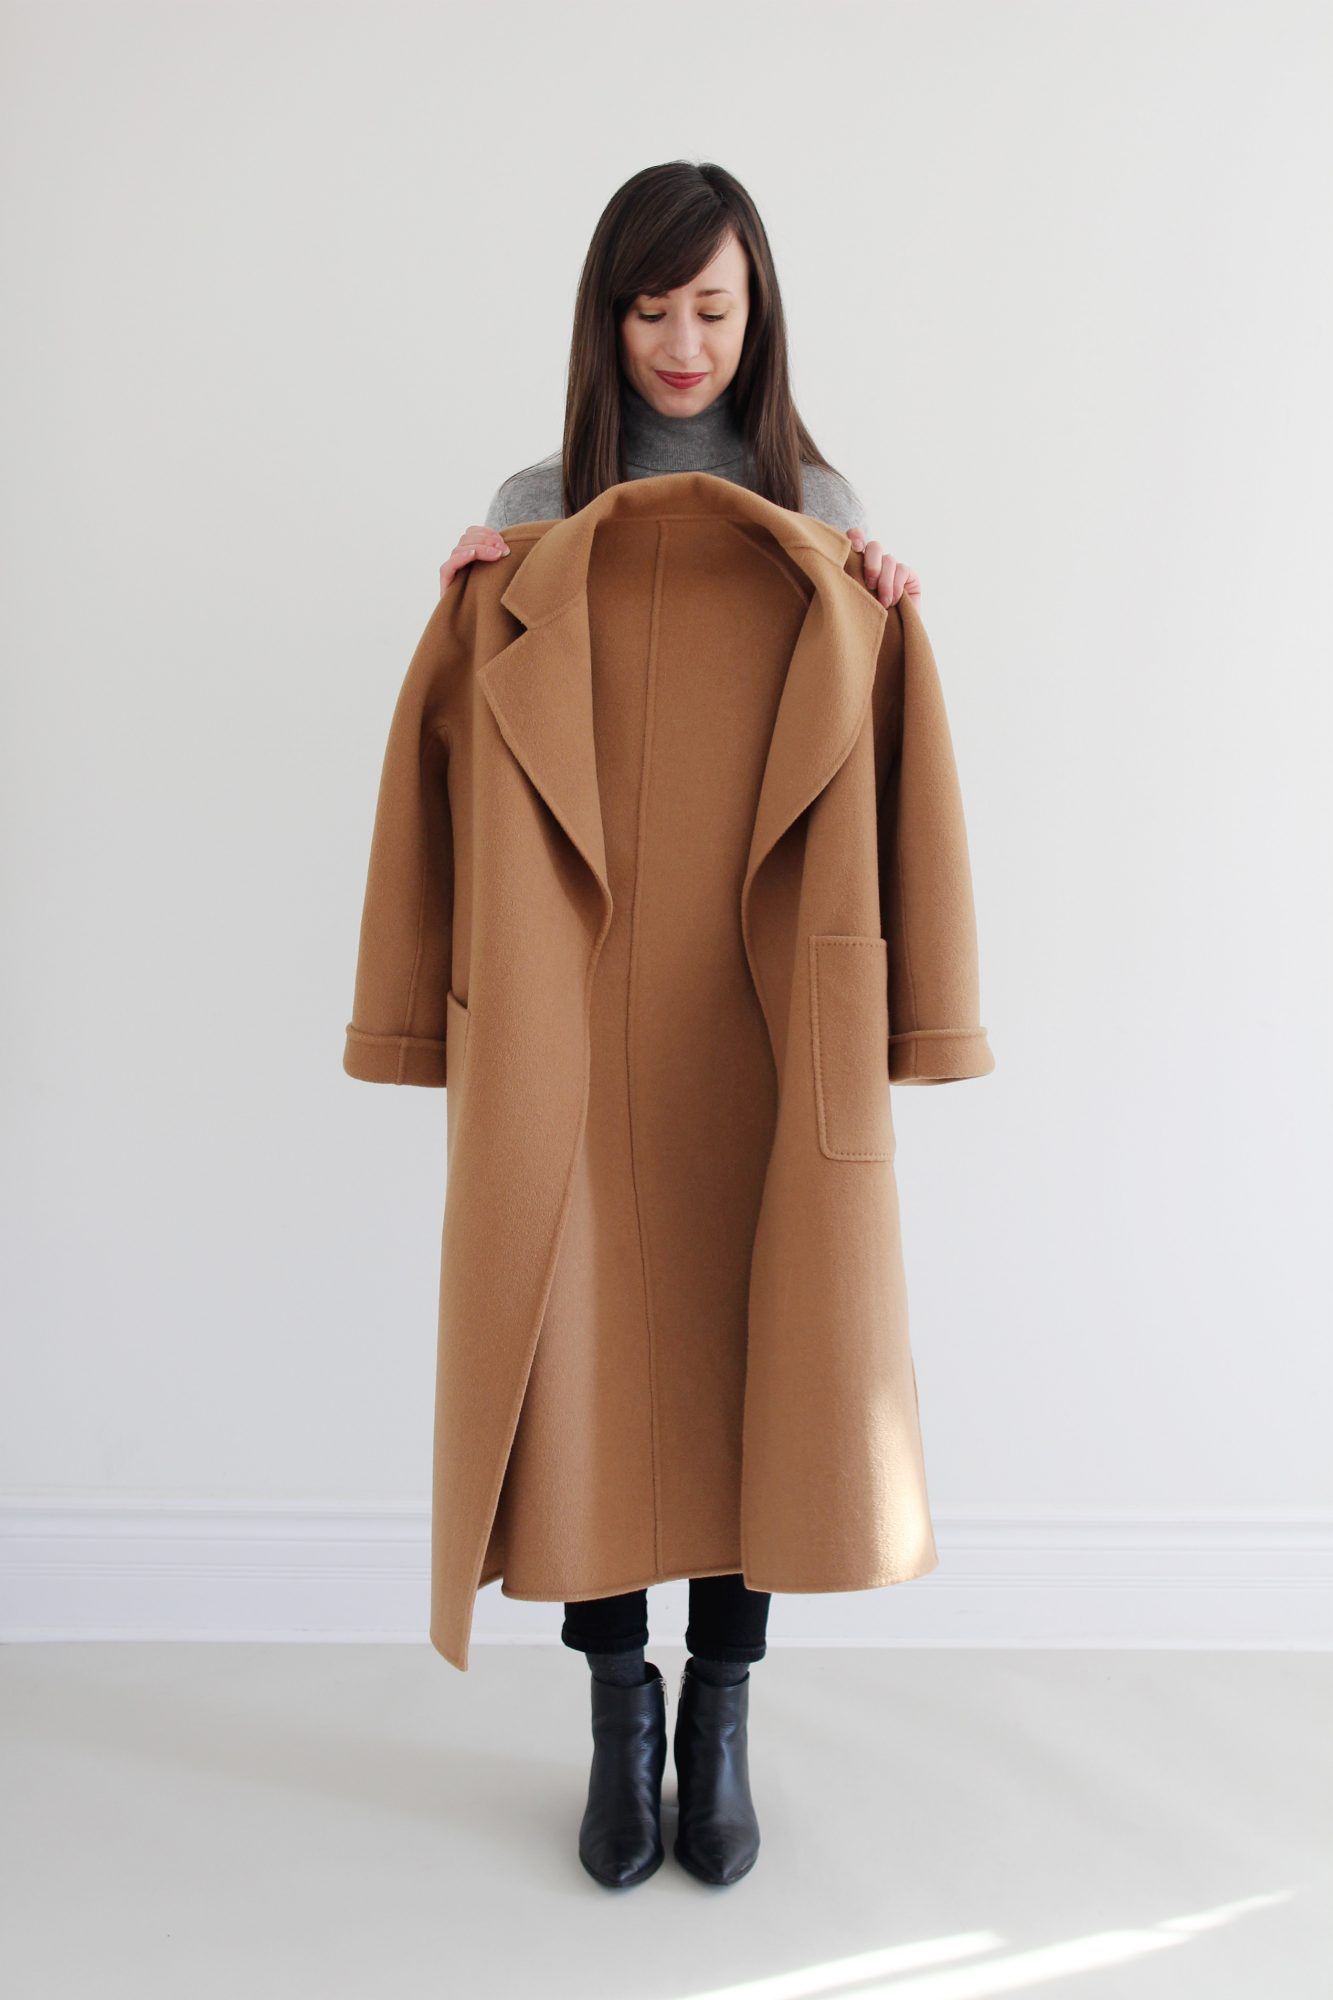 Stylish and elegant wool coats for women